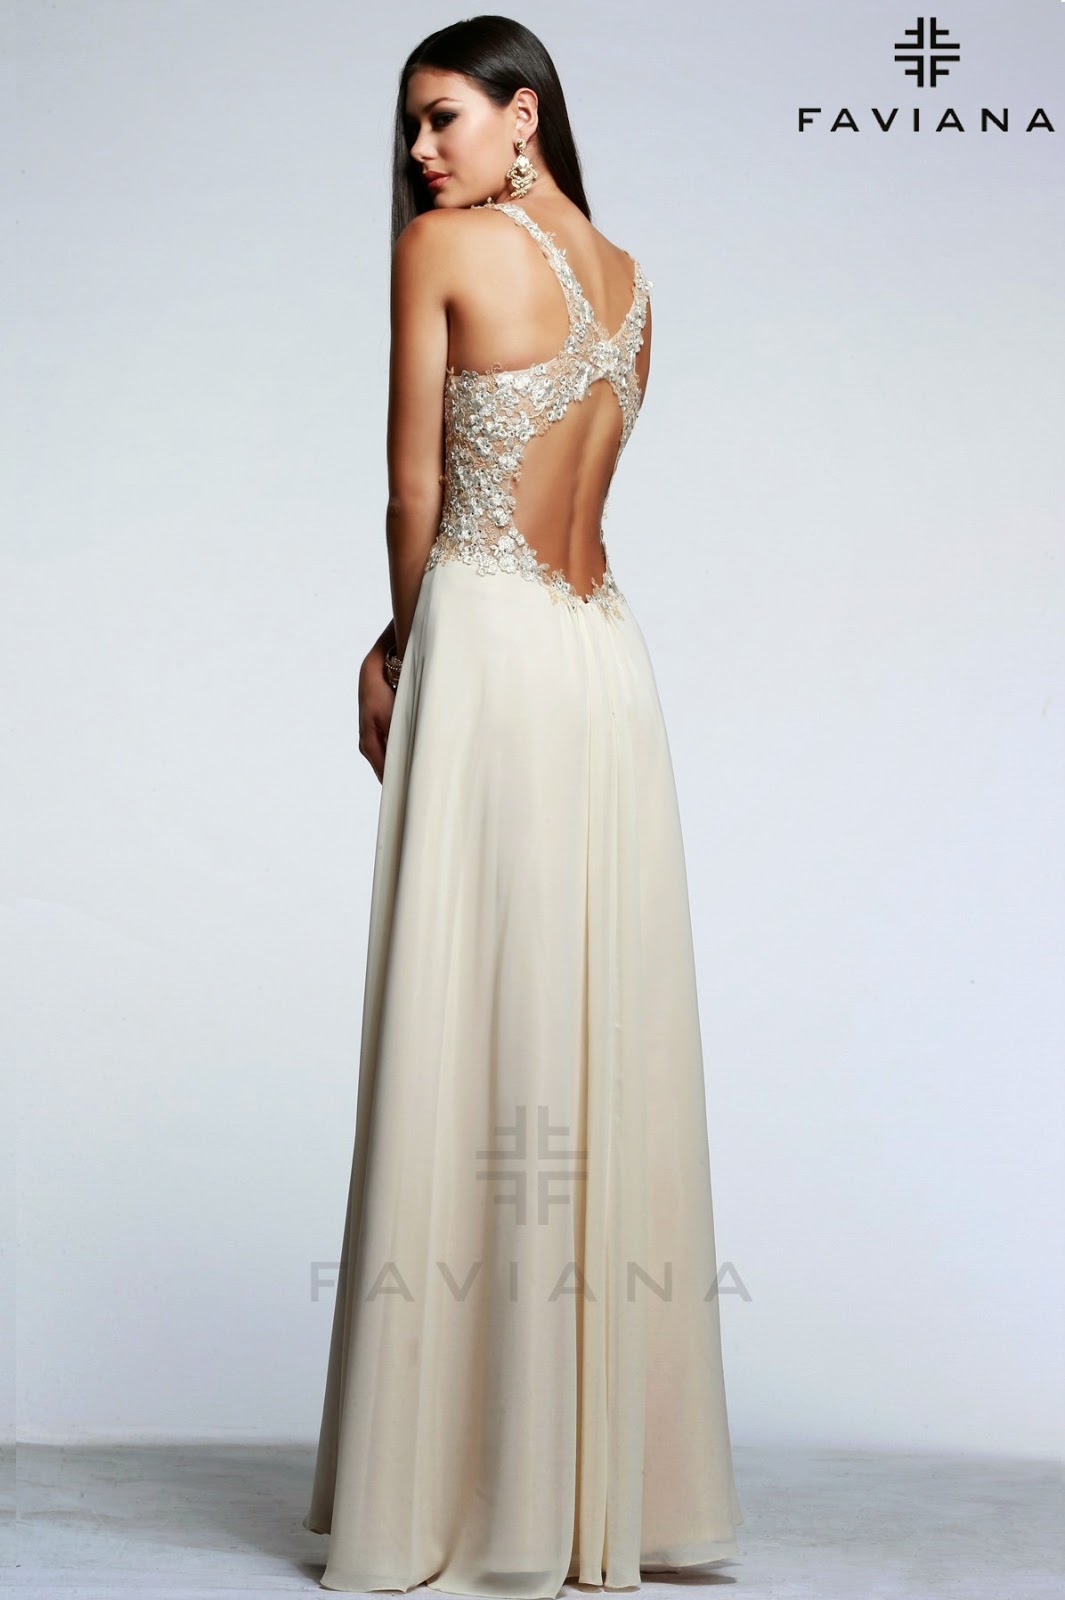 http://www.faviana.com/catalog/dress-s7533?category=white-ivory-collection